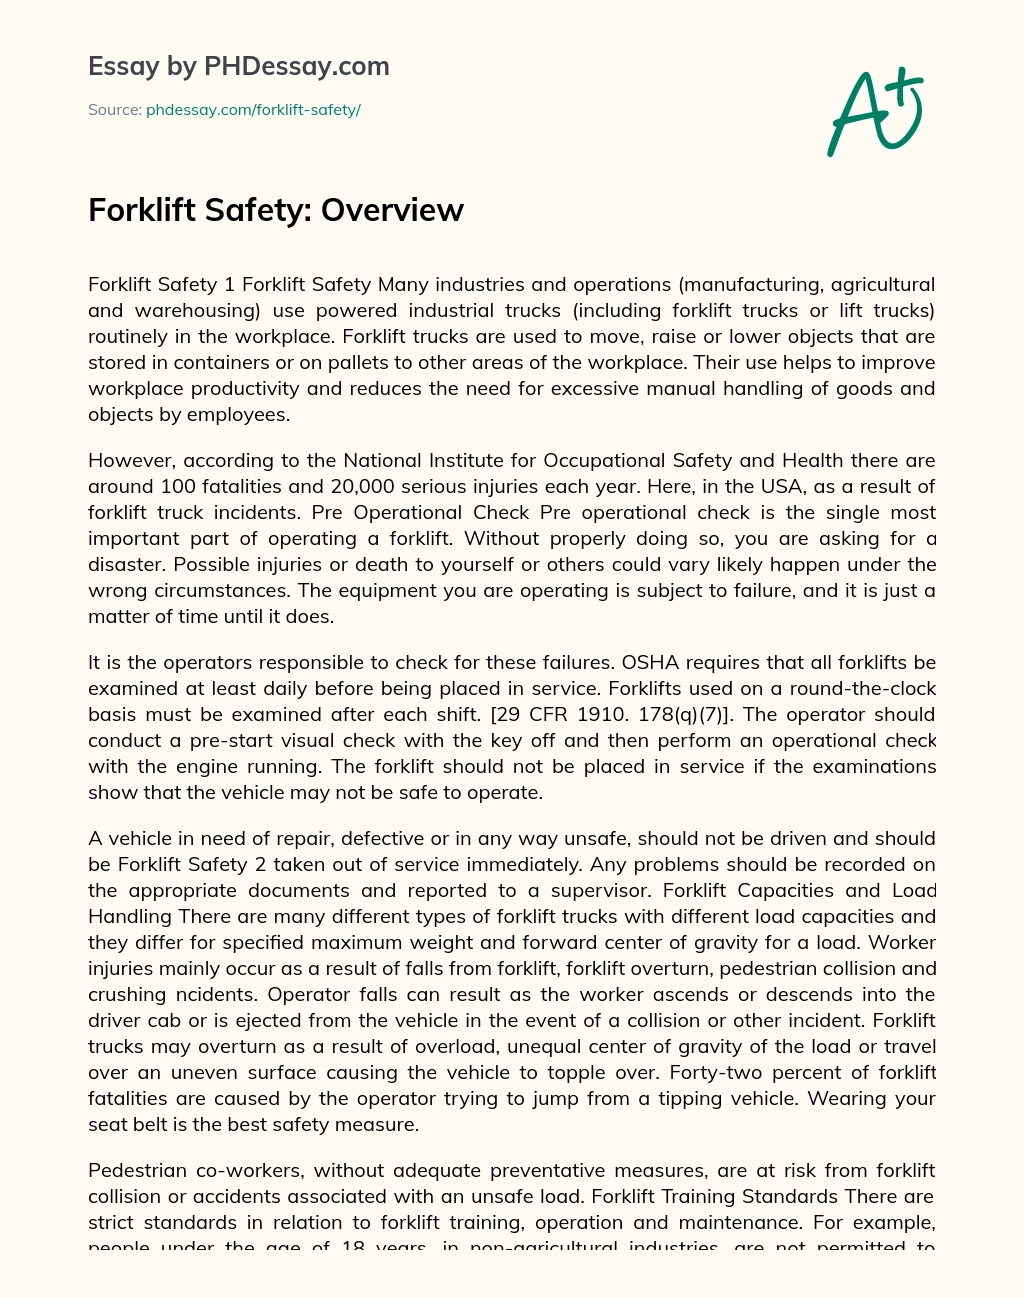 Forklift Safety: Overview essay